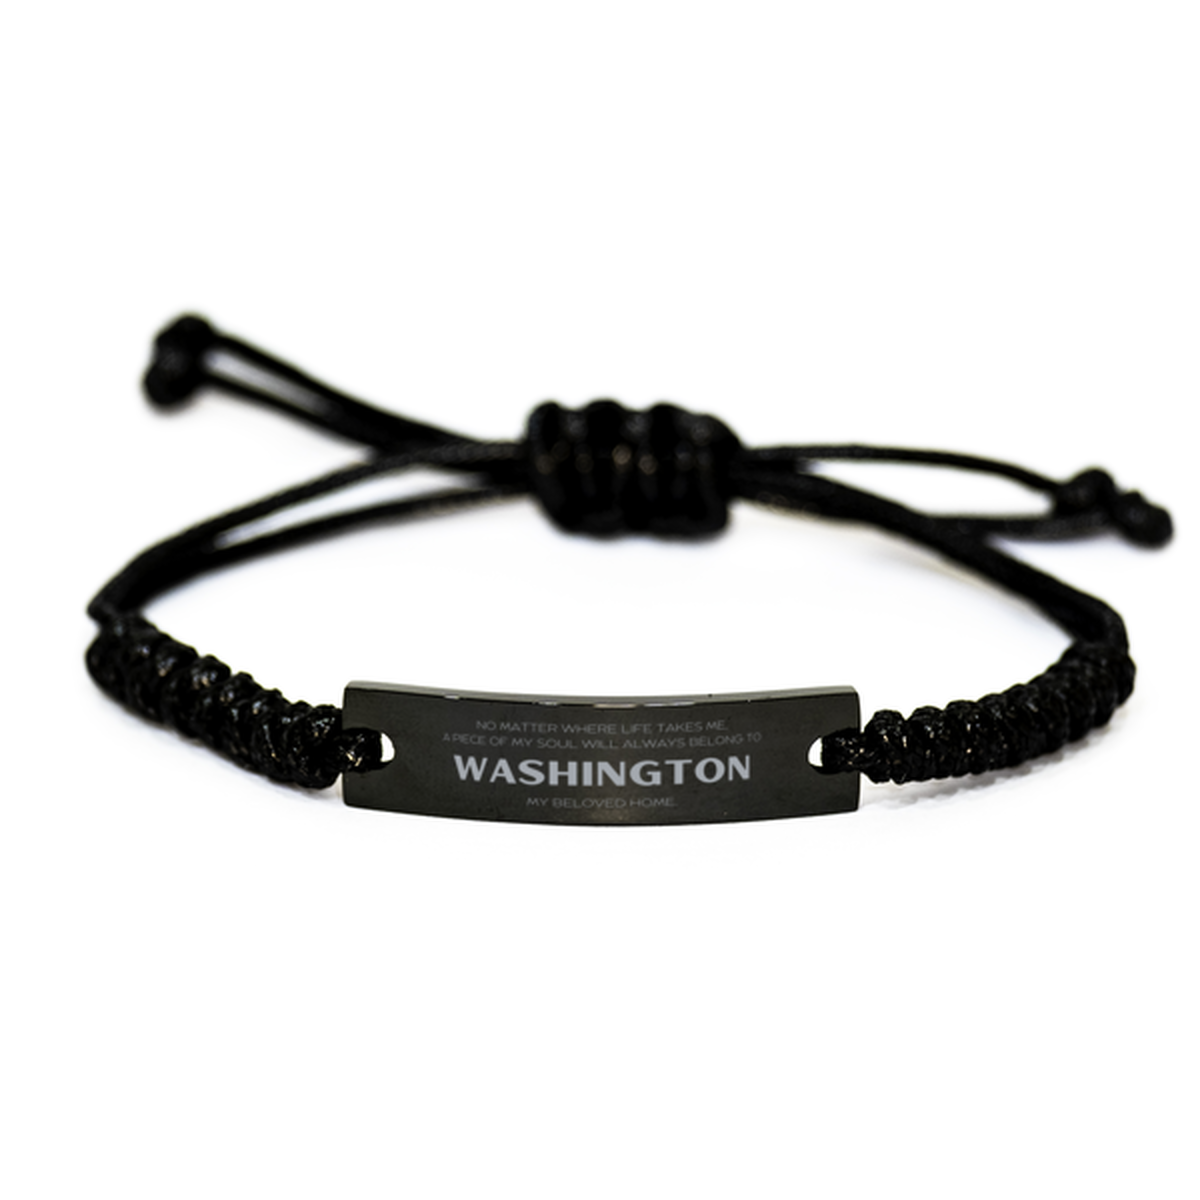 Love Washington State Gifts, My soul will always belong to Washington, Proud Black Rope Bracelet, Birthday Unique Gifts For Washington Men, Women, Friends